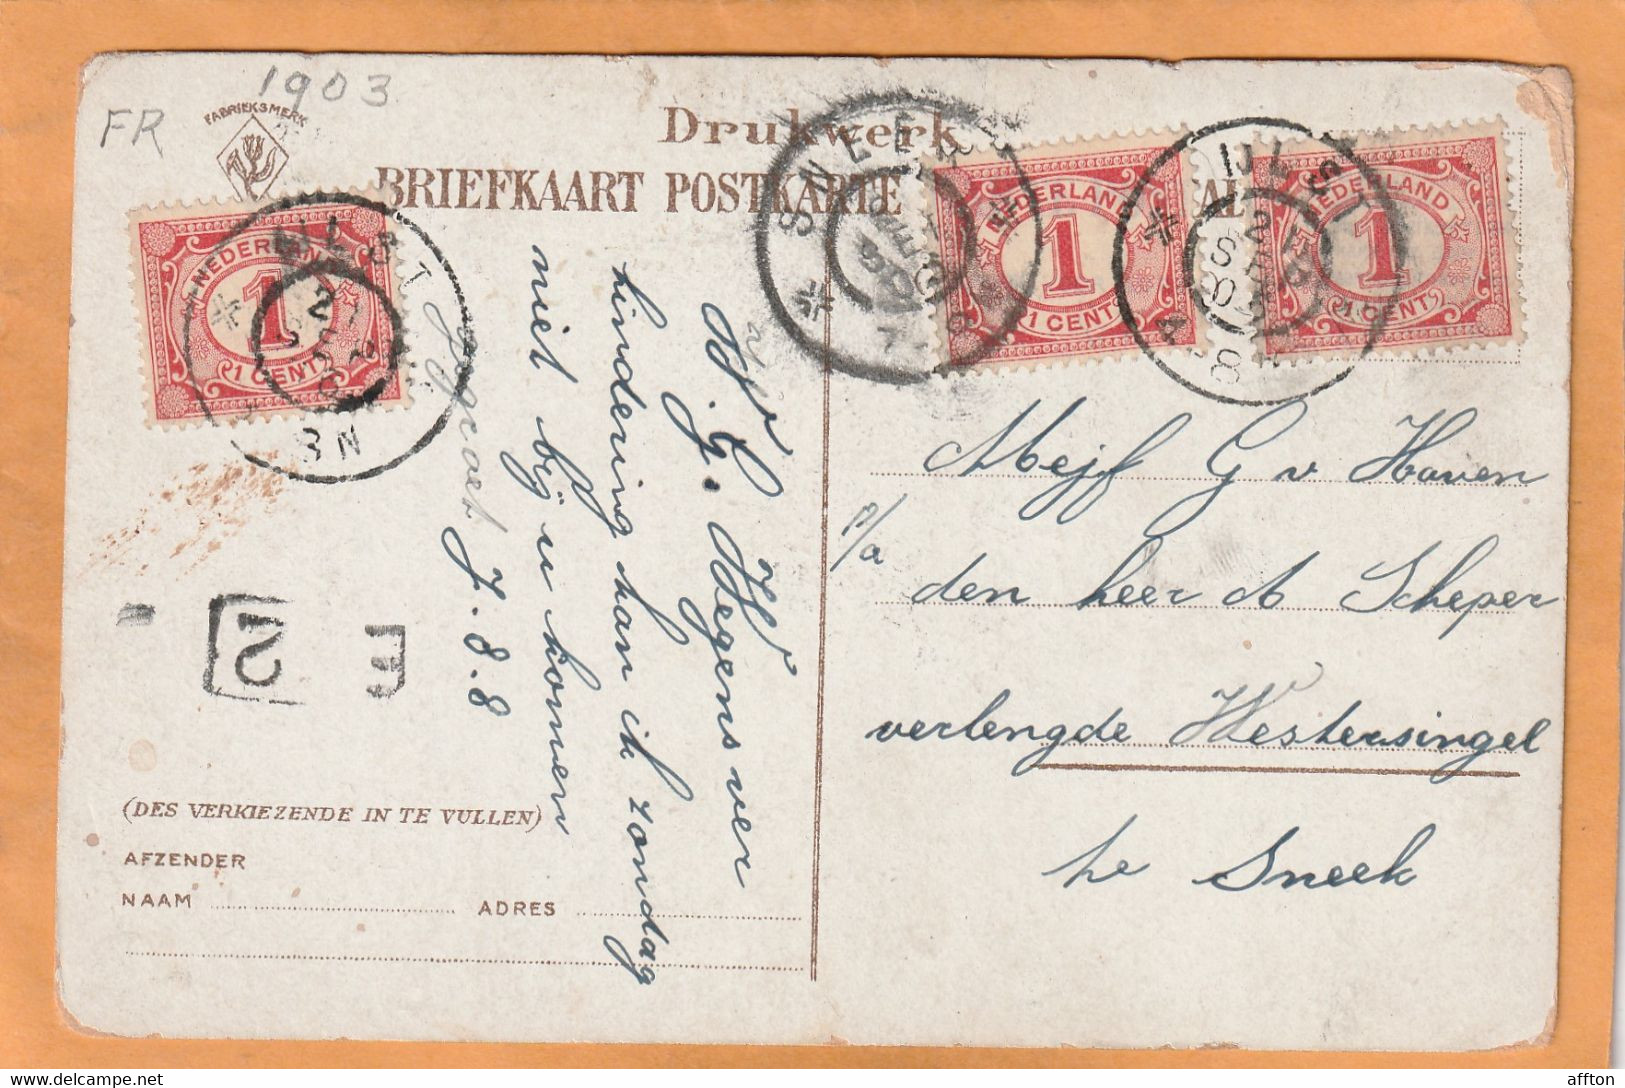 Sneek Netherlands 1903 Postcard - Sneek